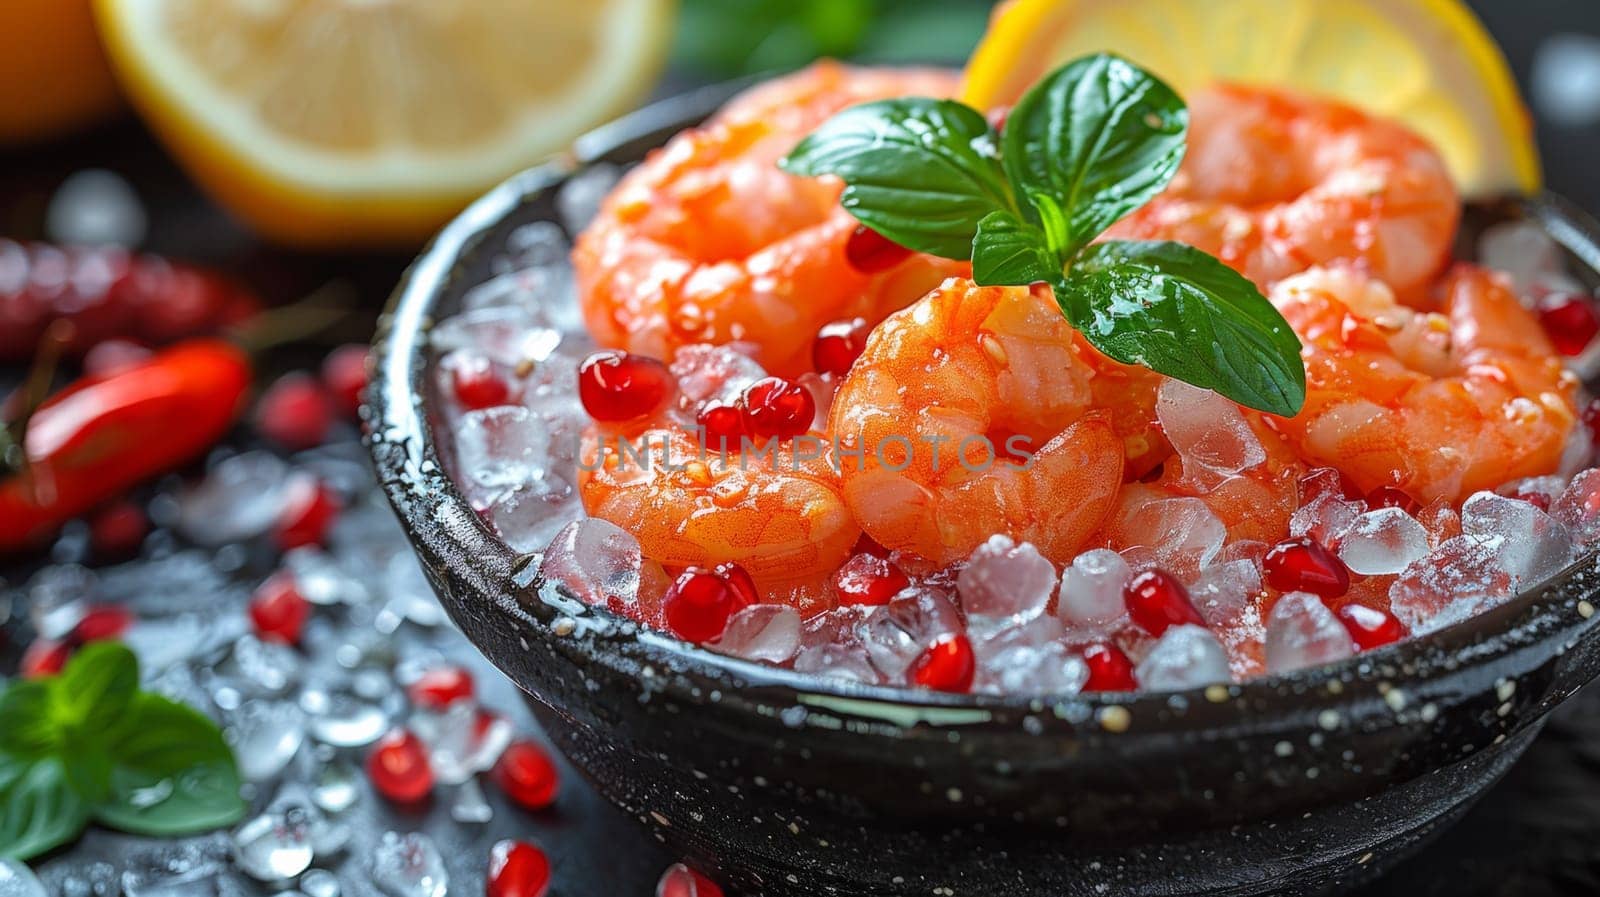 A bowl of shrimp with lime, lemon and pomegranate garnish